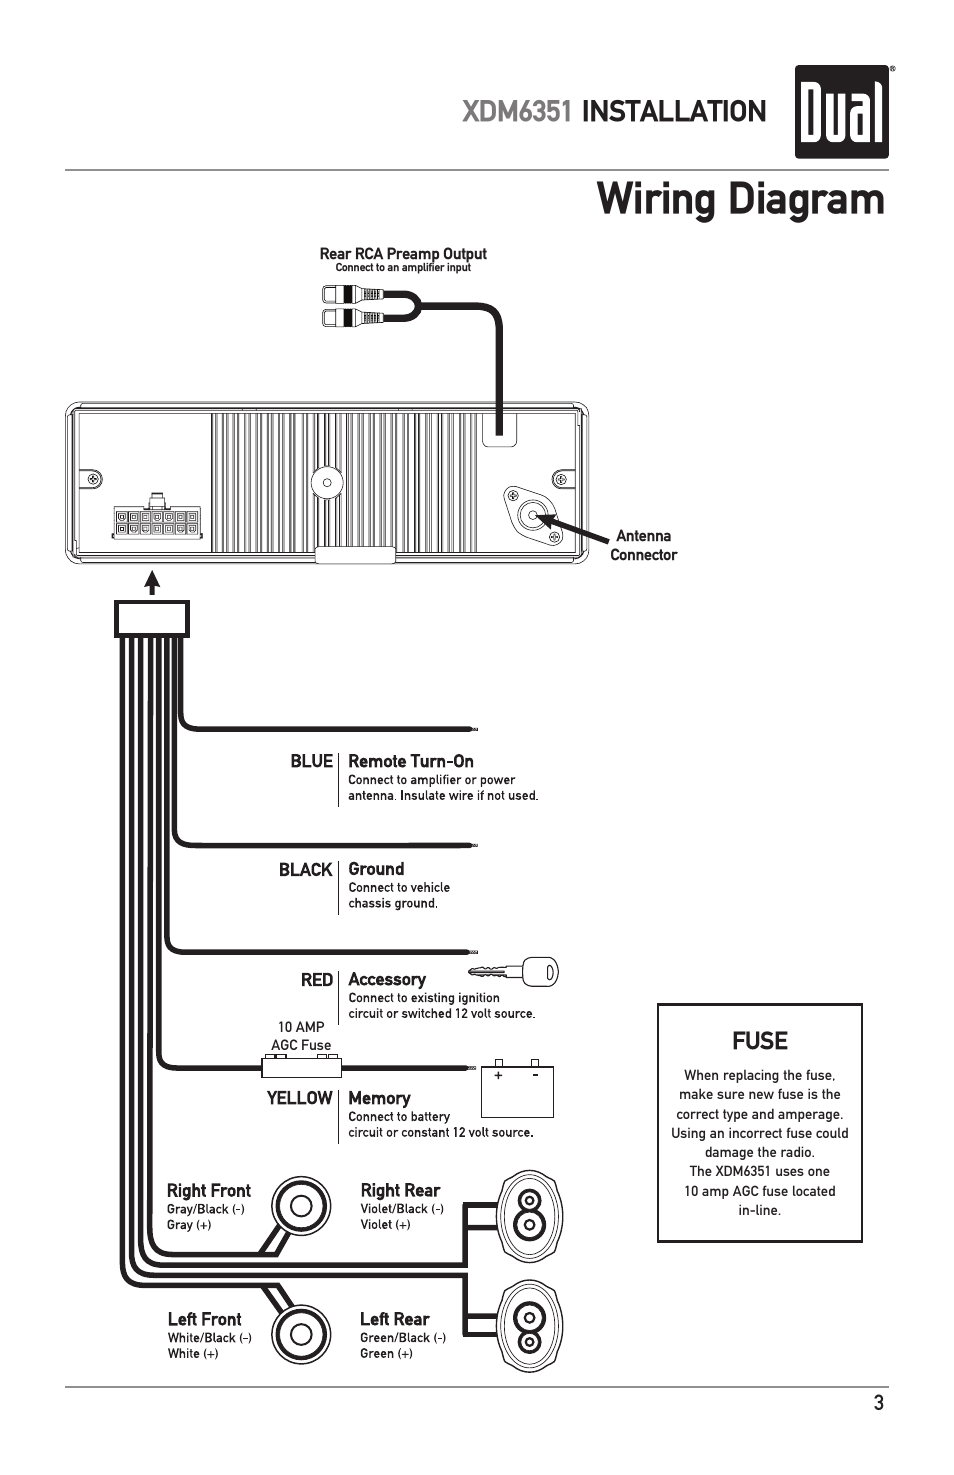 Wiring diagram, Xdm6351 installation, Fuse | Dual XDM6351 User Manual